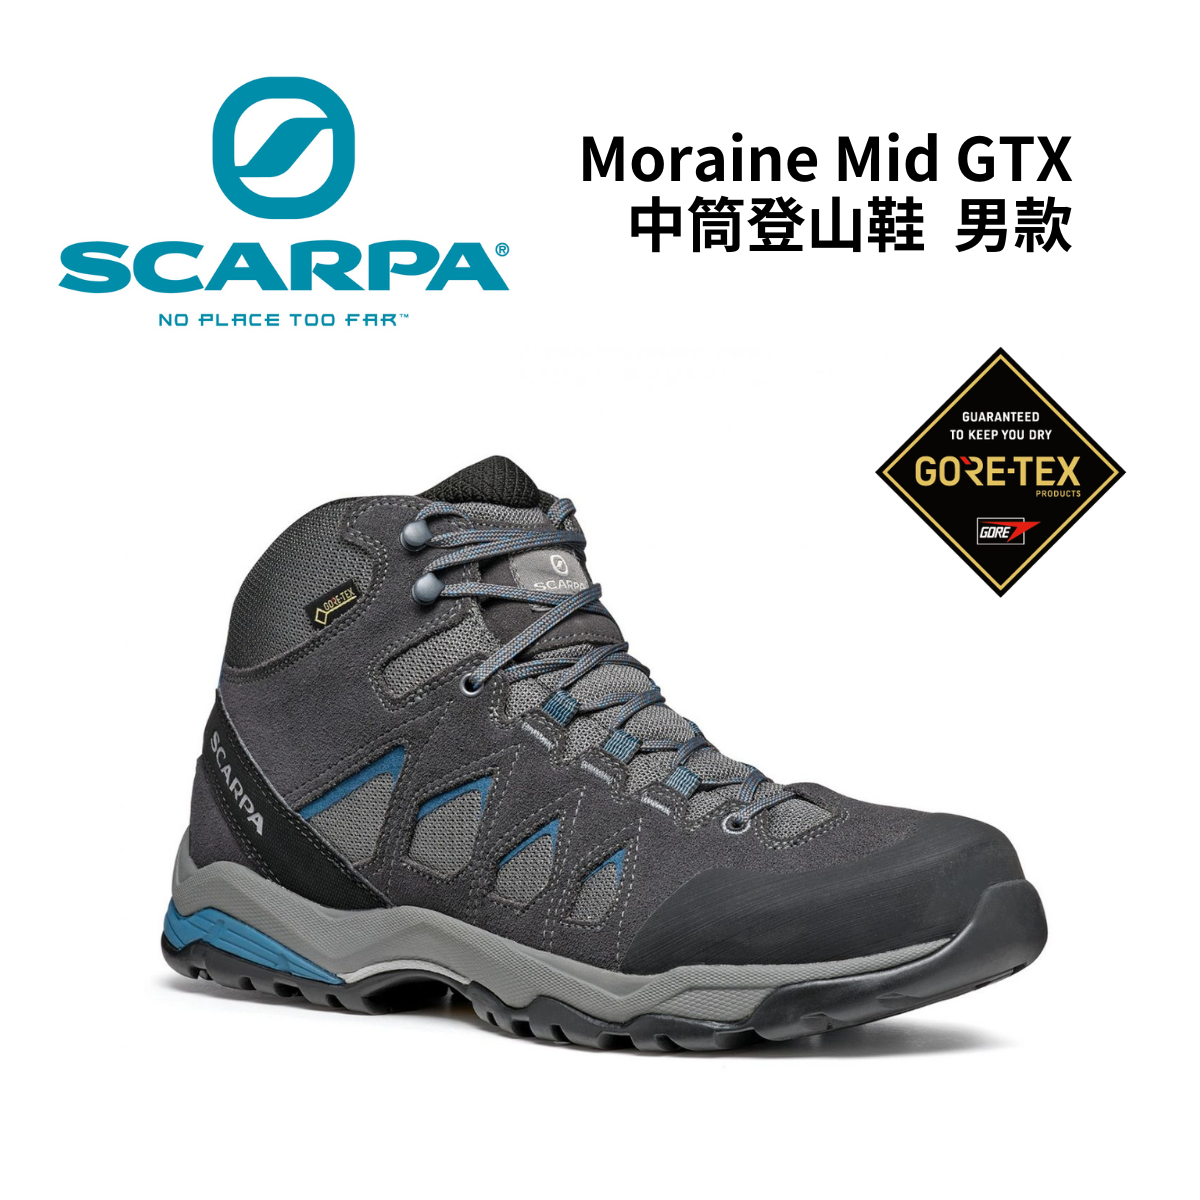 【Scarpa】MORAINE MID GTX 男款 中筒登山鞋 - 灰/暴風灰/湖水藍